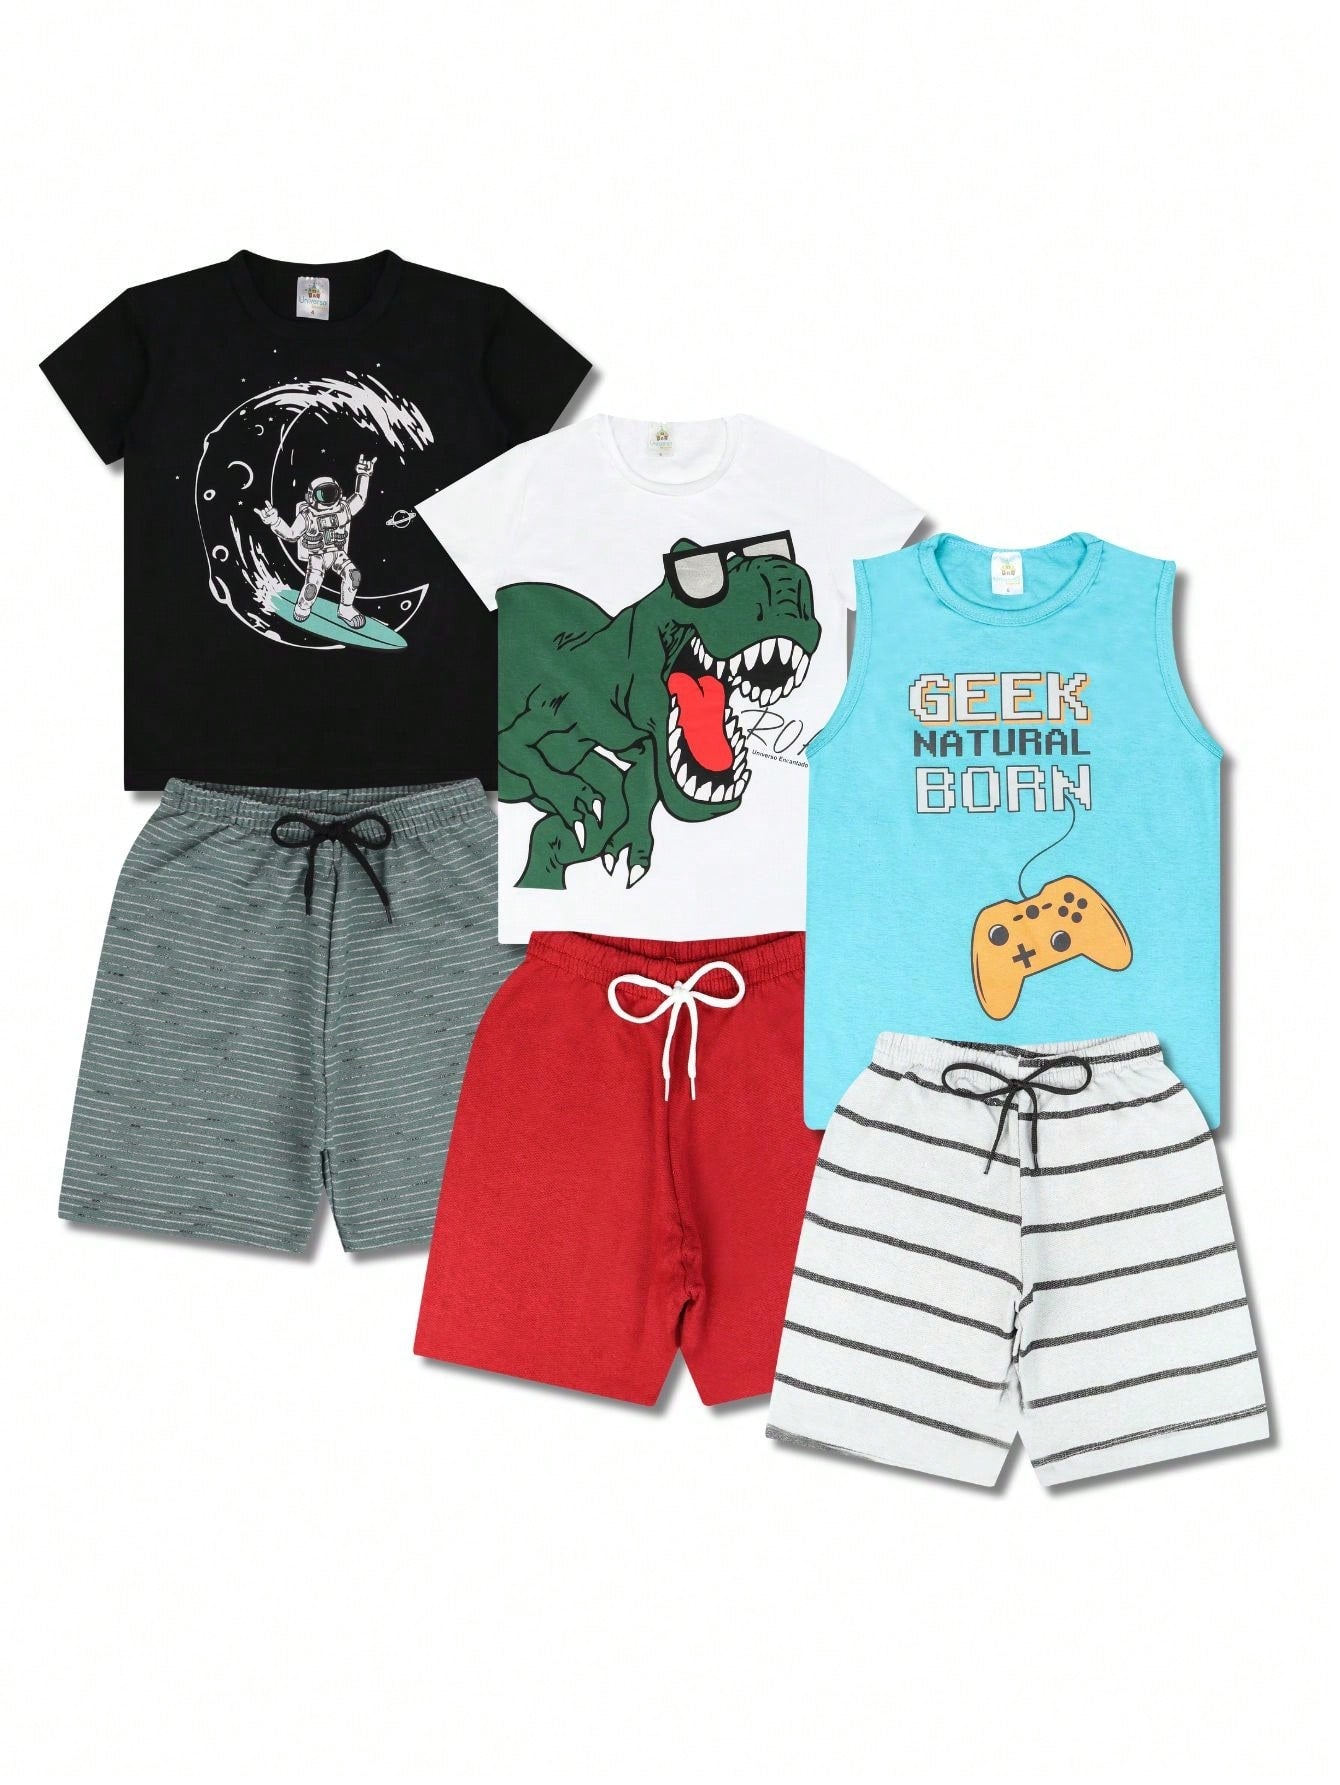 Roupas Infantil Menino - Kit Sortido 10 Peças (5 conjuntos)- 5 Camisetas + 5 Bermudas